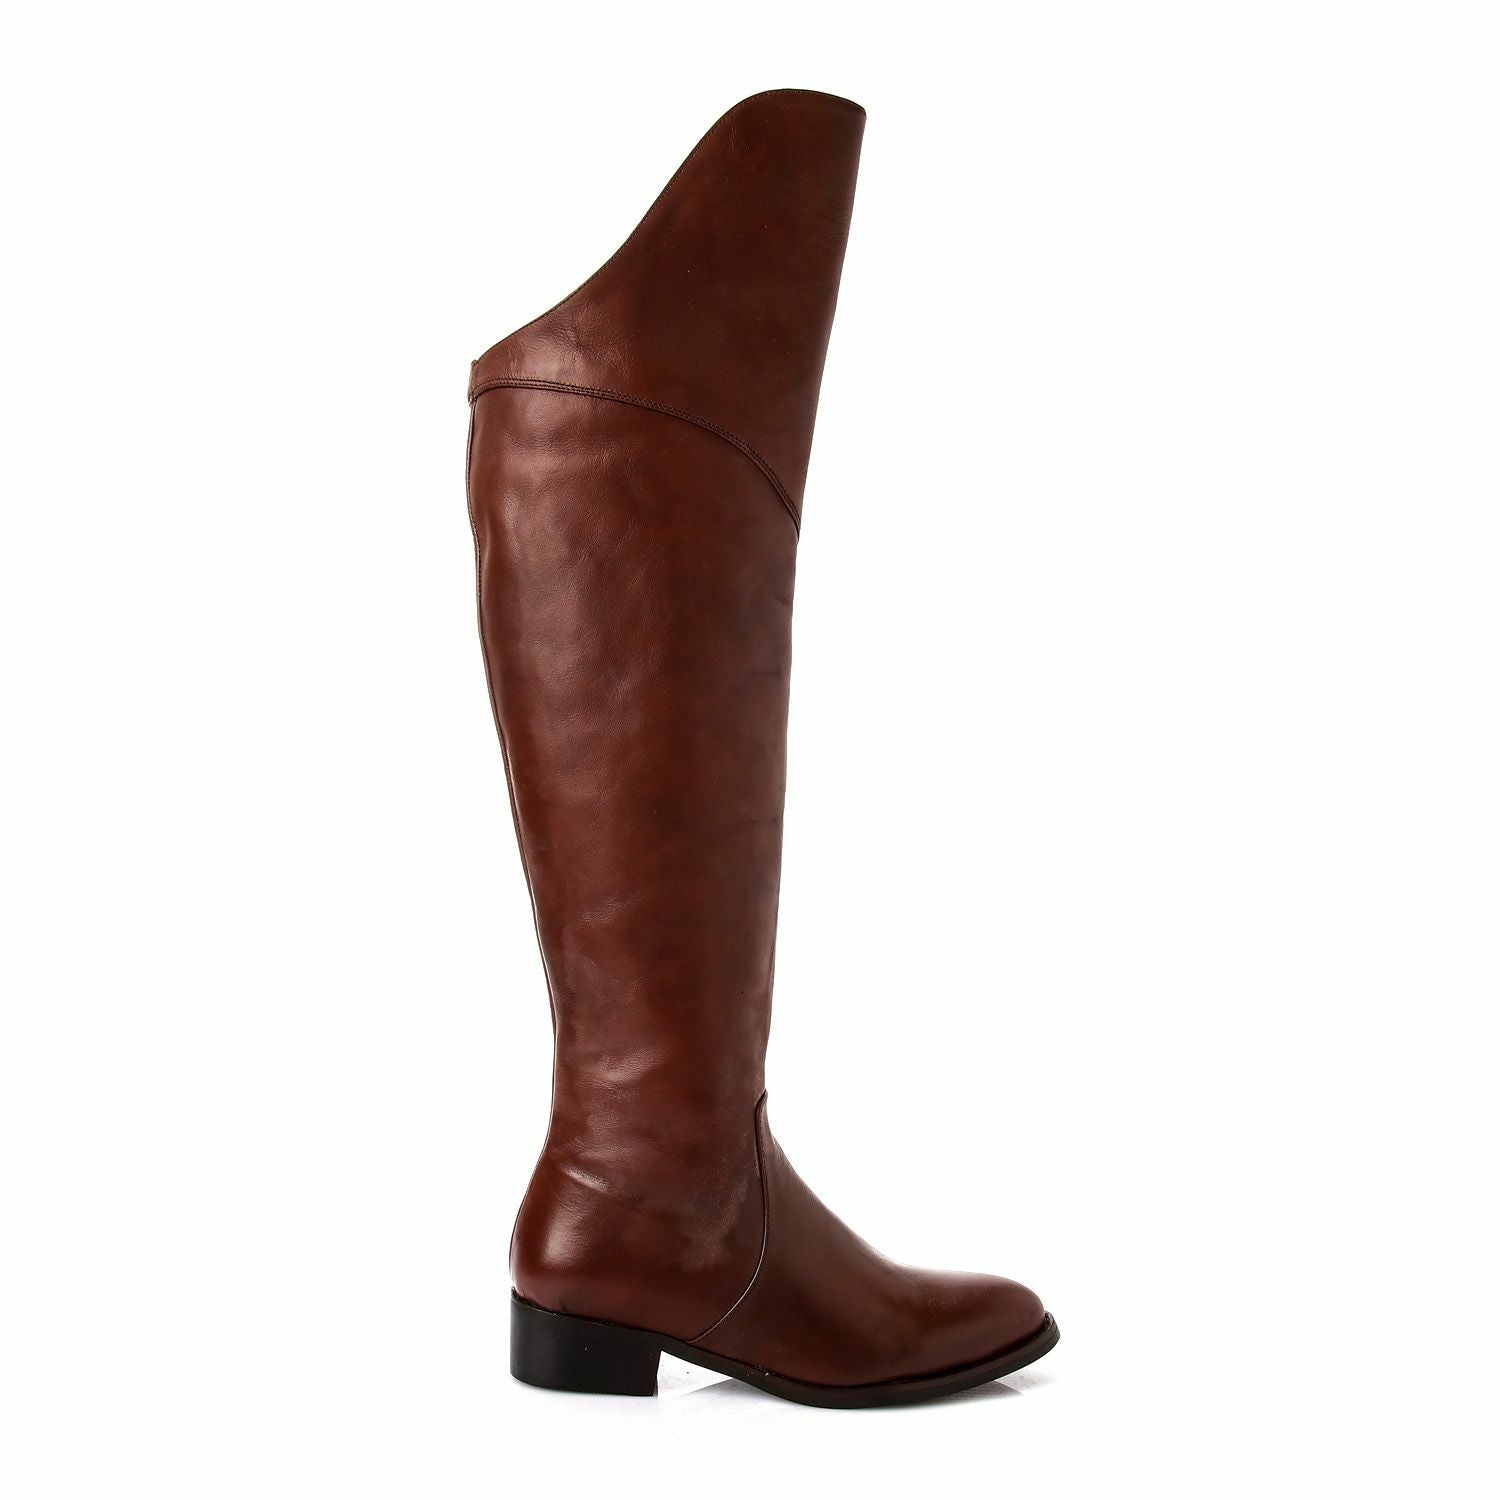 Mr Joe Boot Real Leather 3771